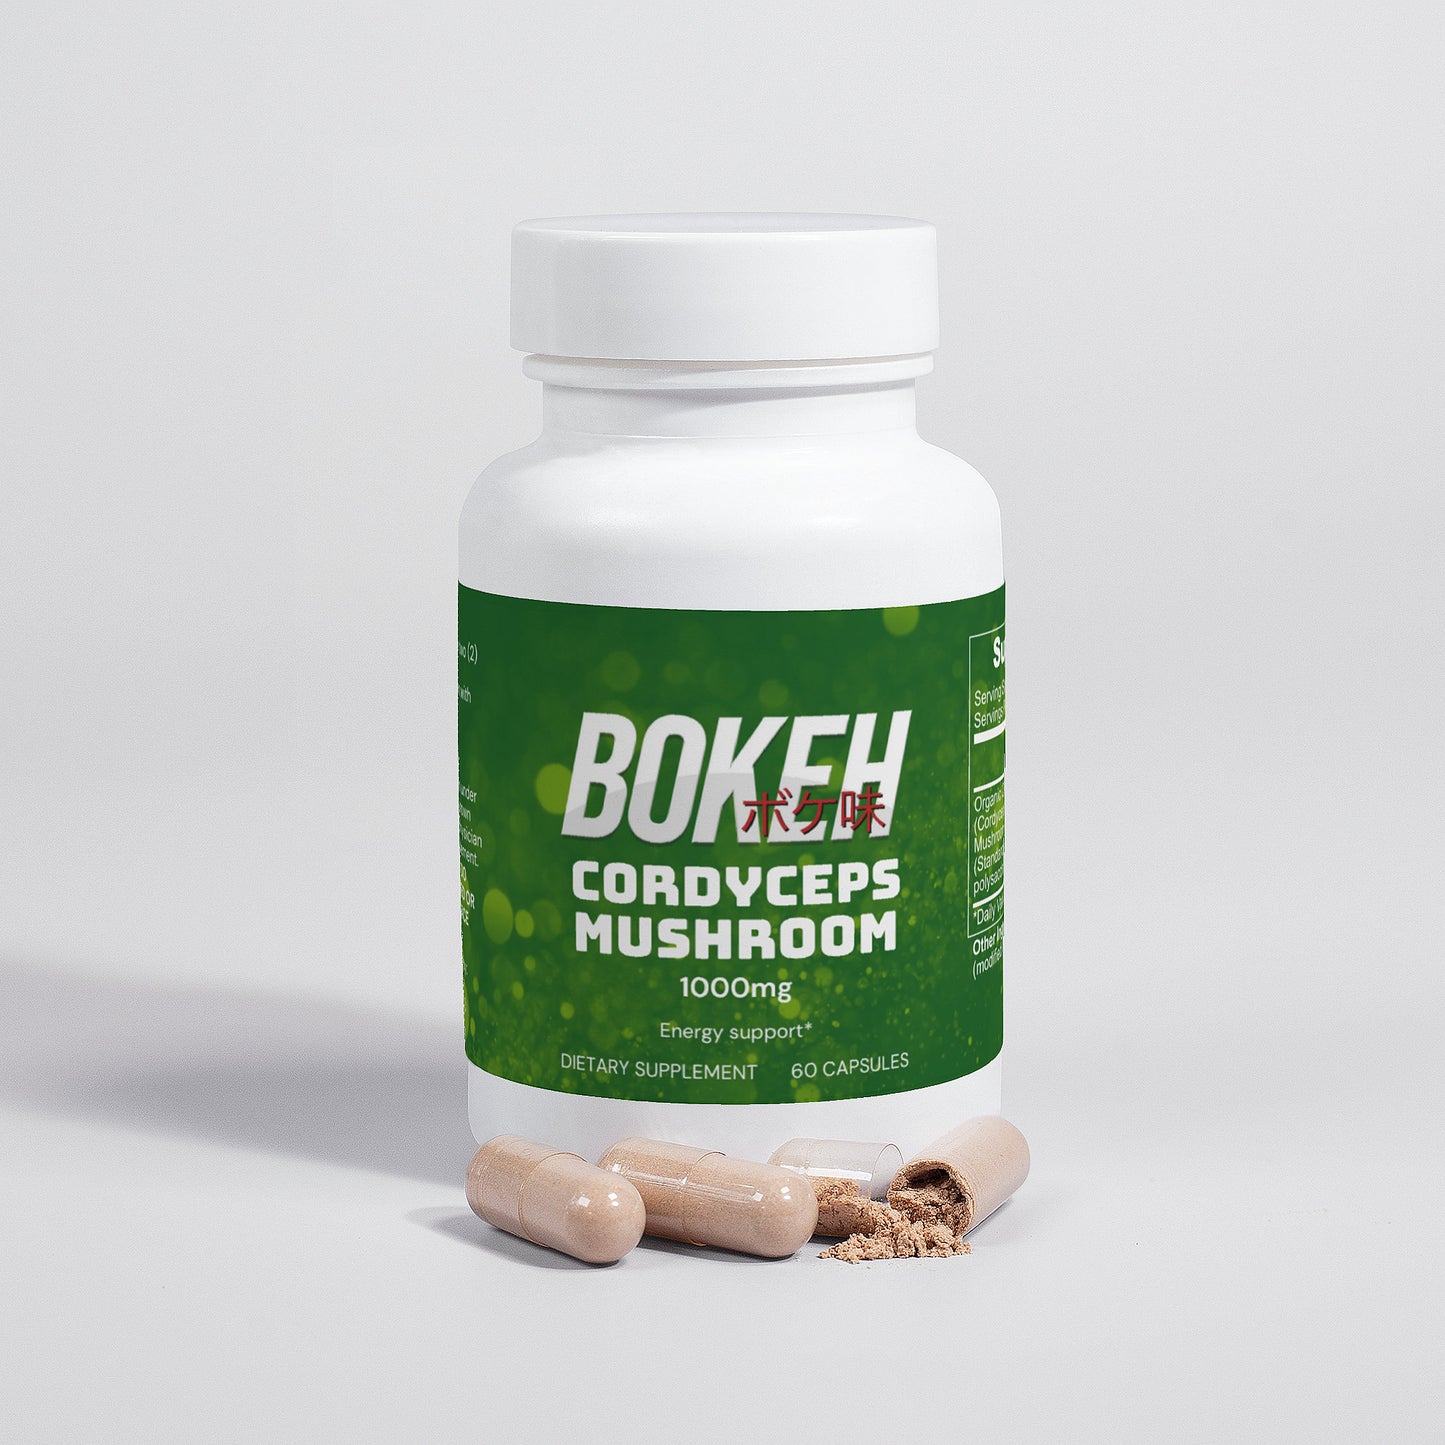 Bokeh Cordyceps Mushroom Capsules